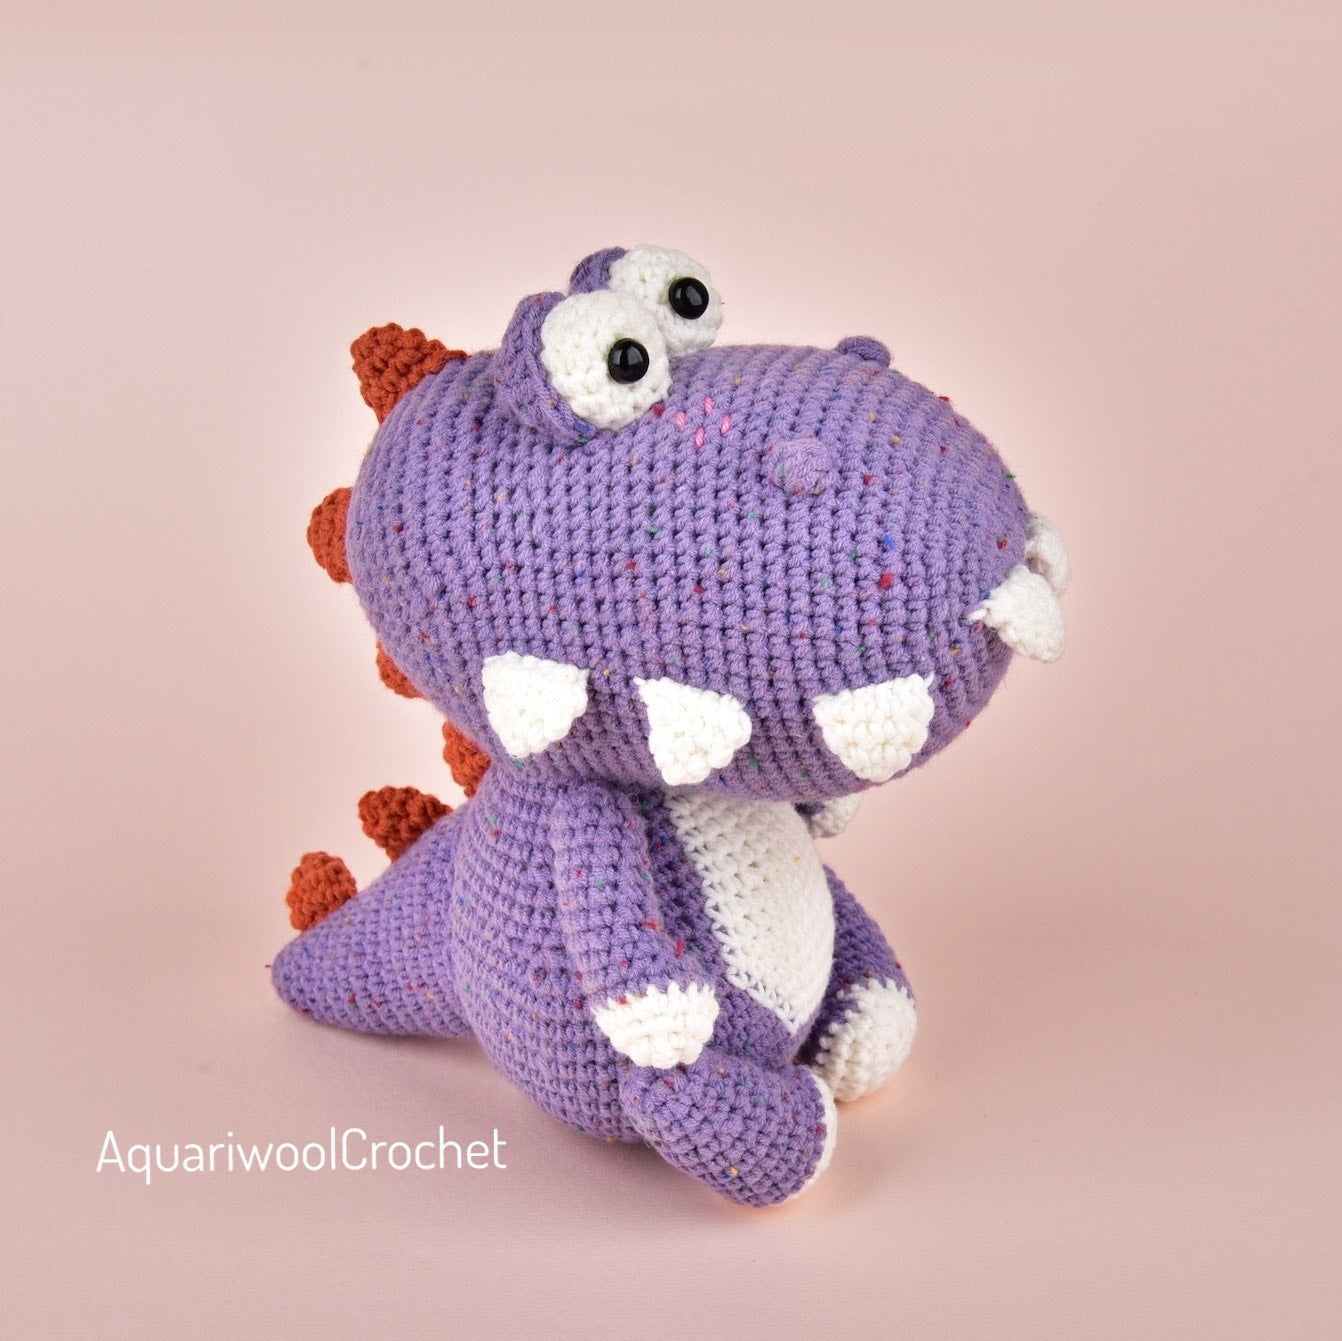 Dino The Dinosaur Crochet Pattern by Aquariwool (Crochet Doll Pattern/Amigurumi Pattern for Baby gift)